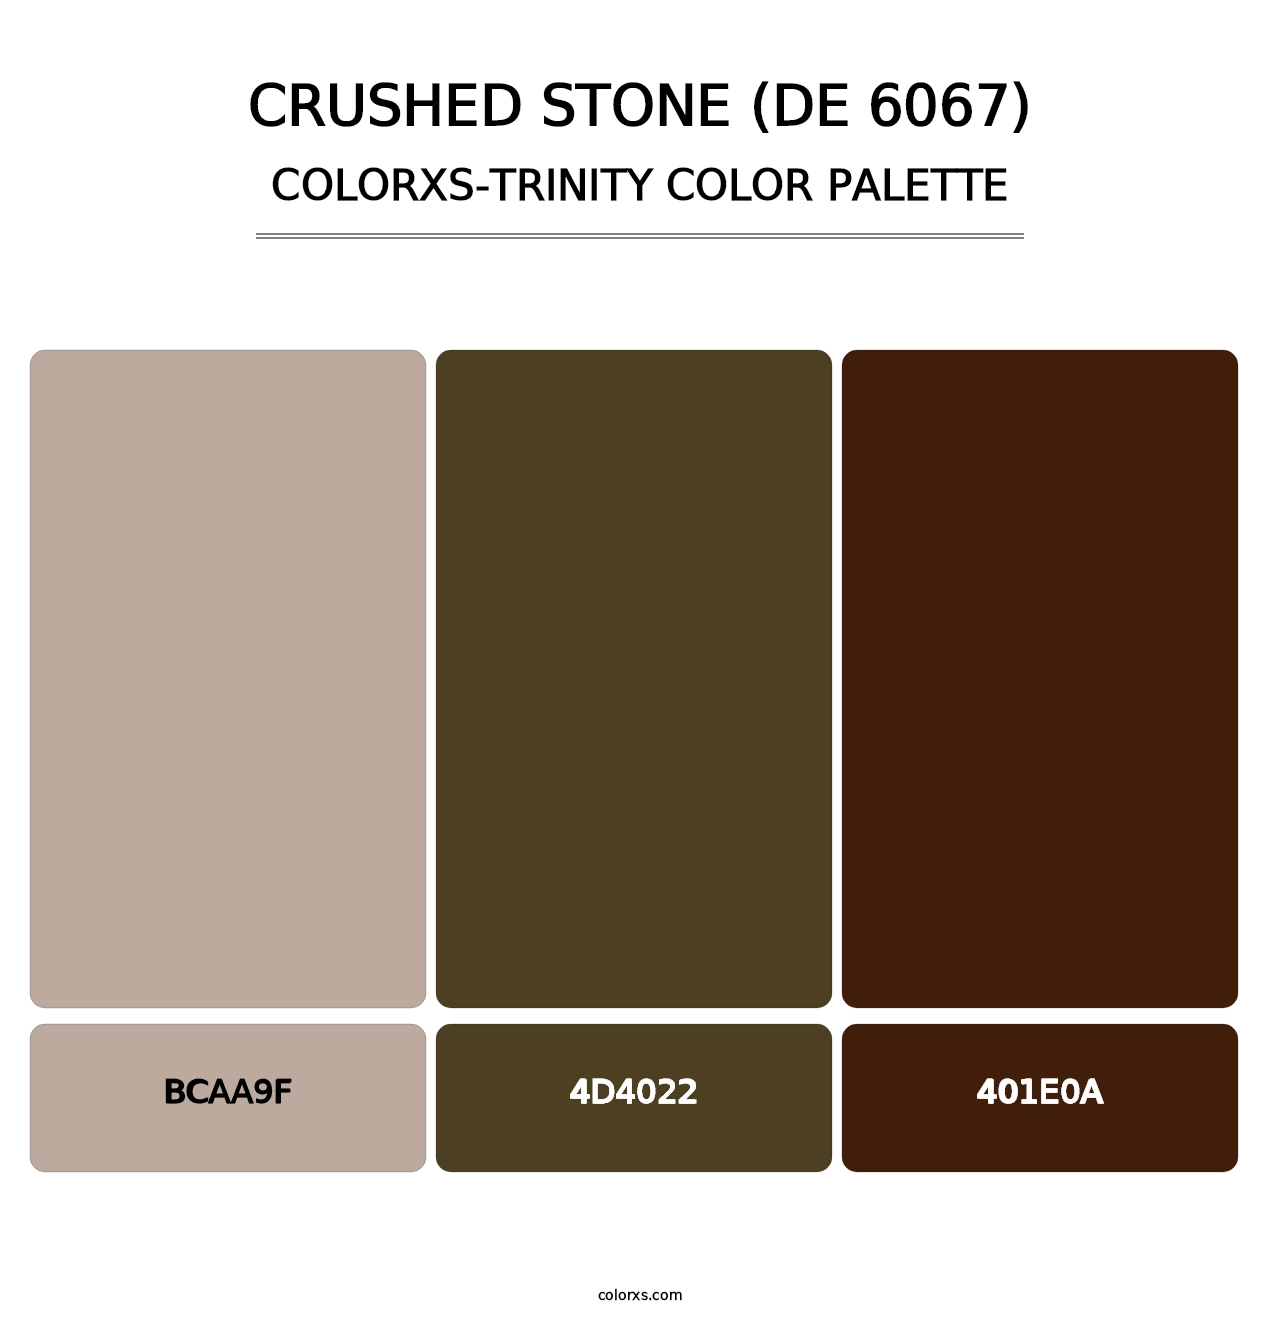 Crushed Stone (DE 6067) - Colorxs Trinity Palette